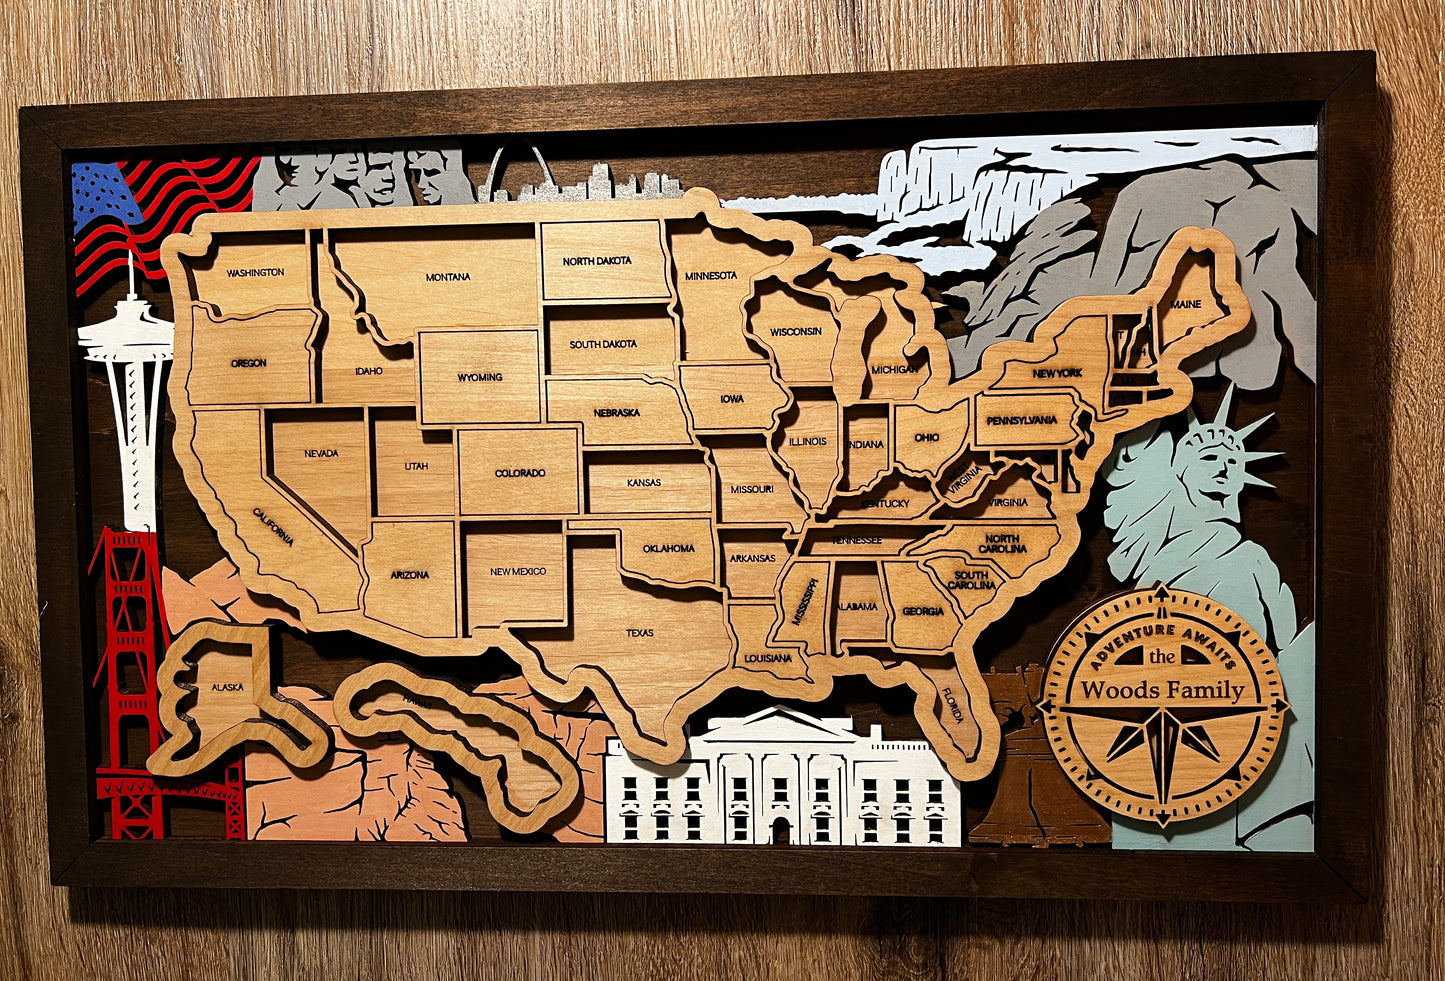 USA Travel Map